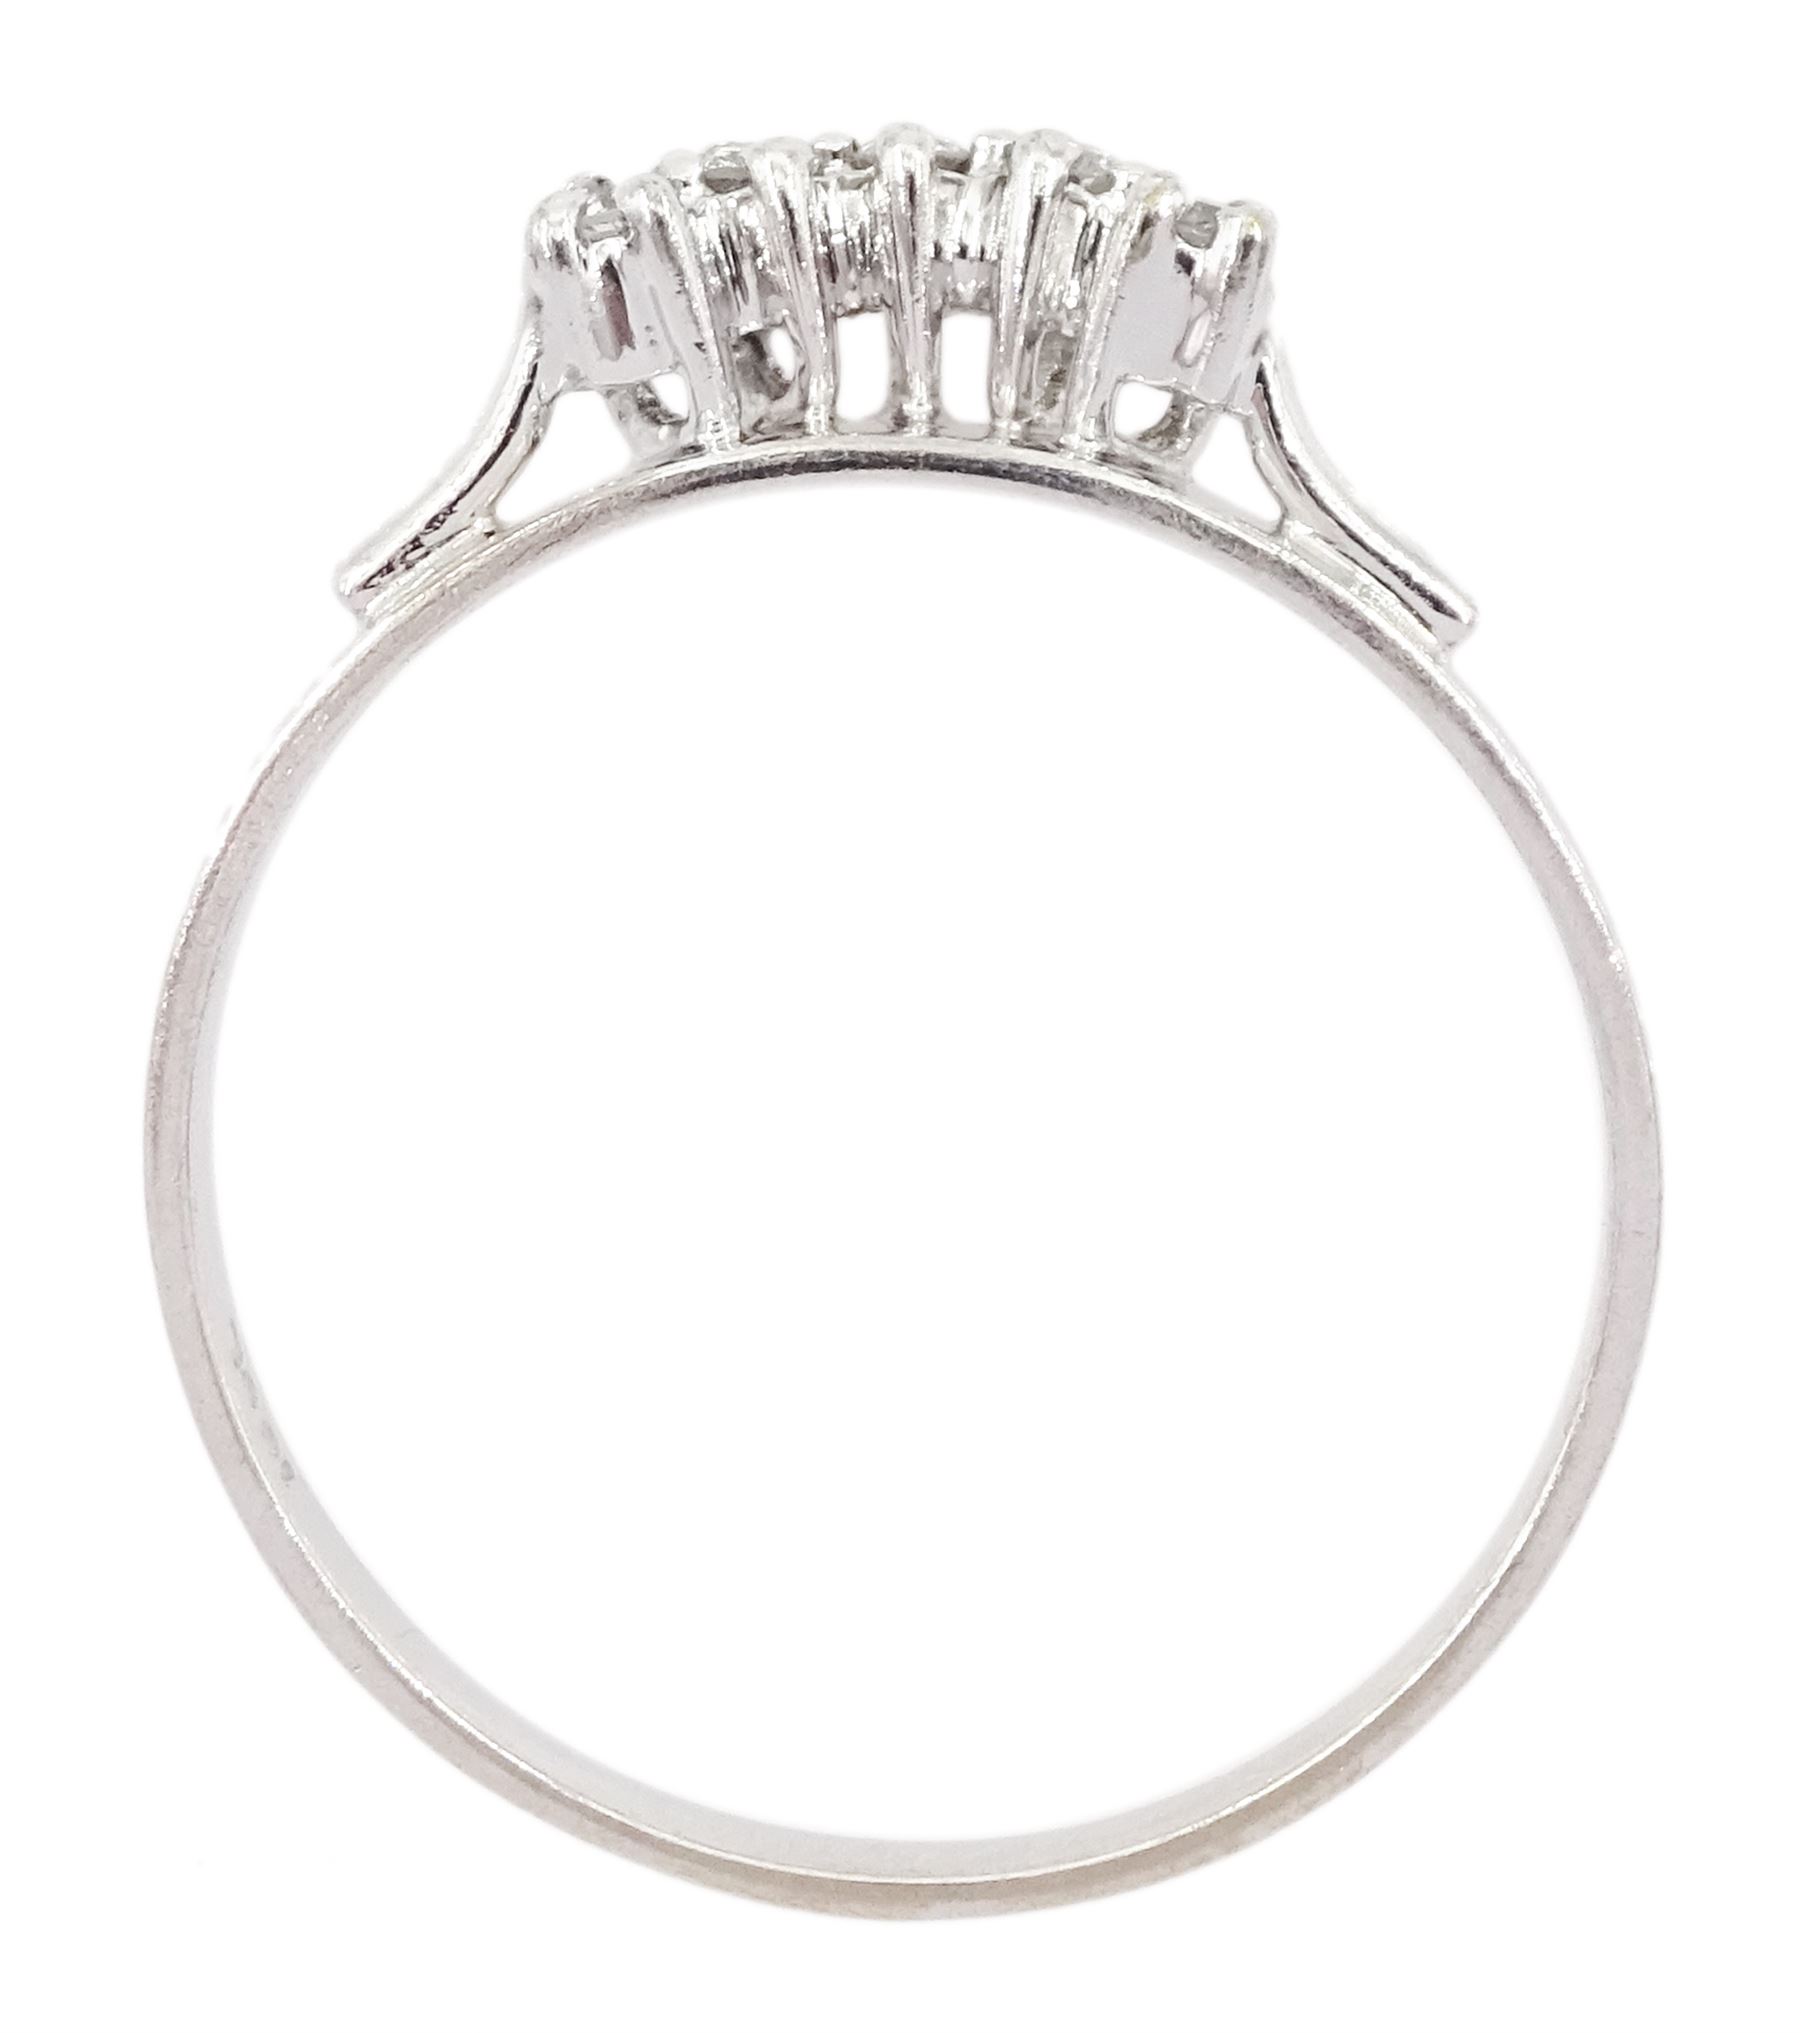 18ct white gold five stone round brilliant cut diamond ring - Image 4 of 4